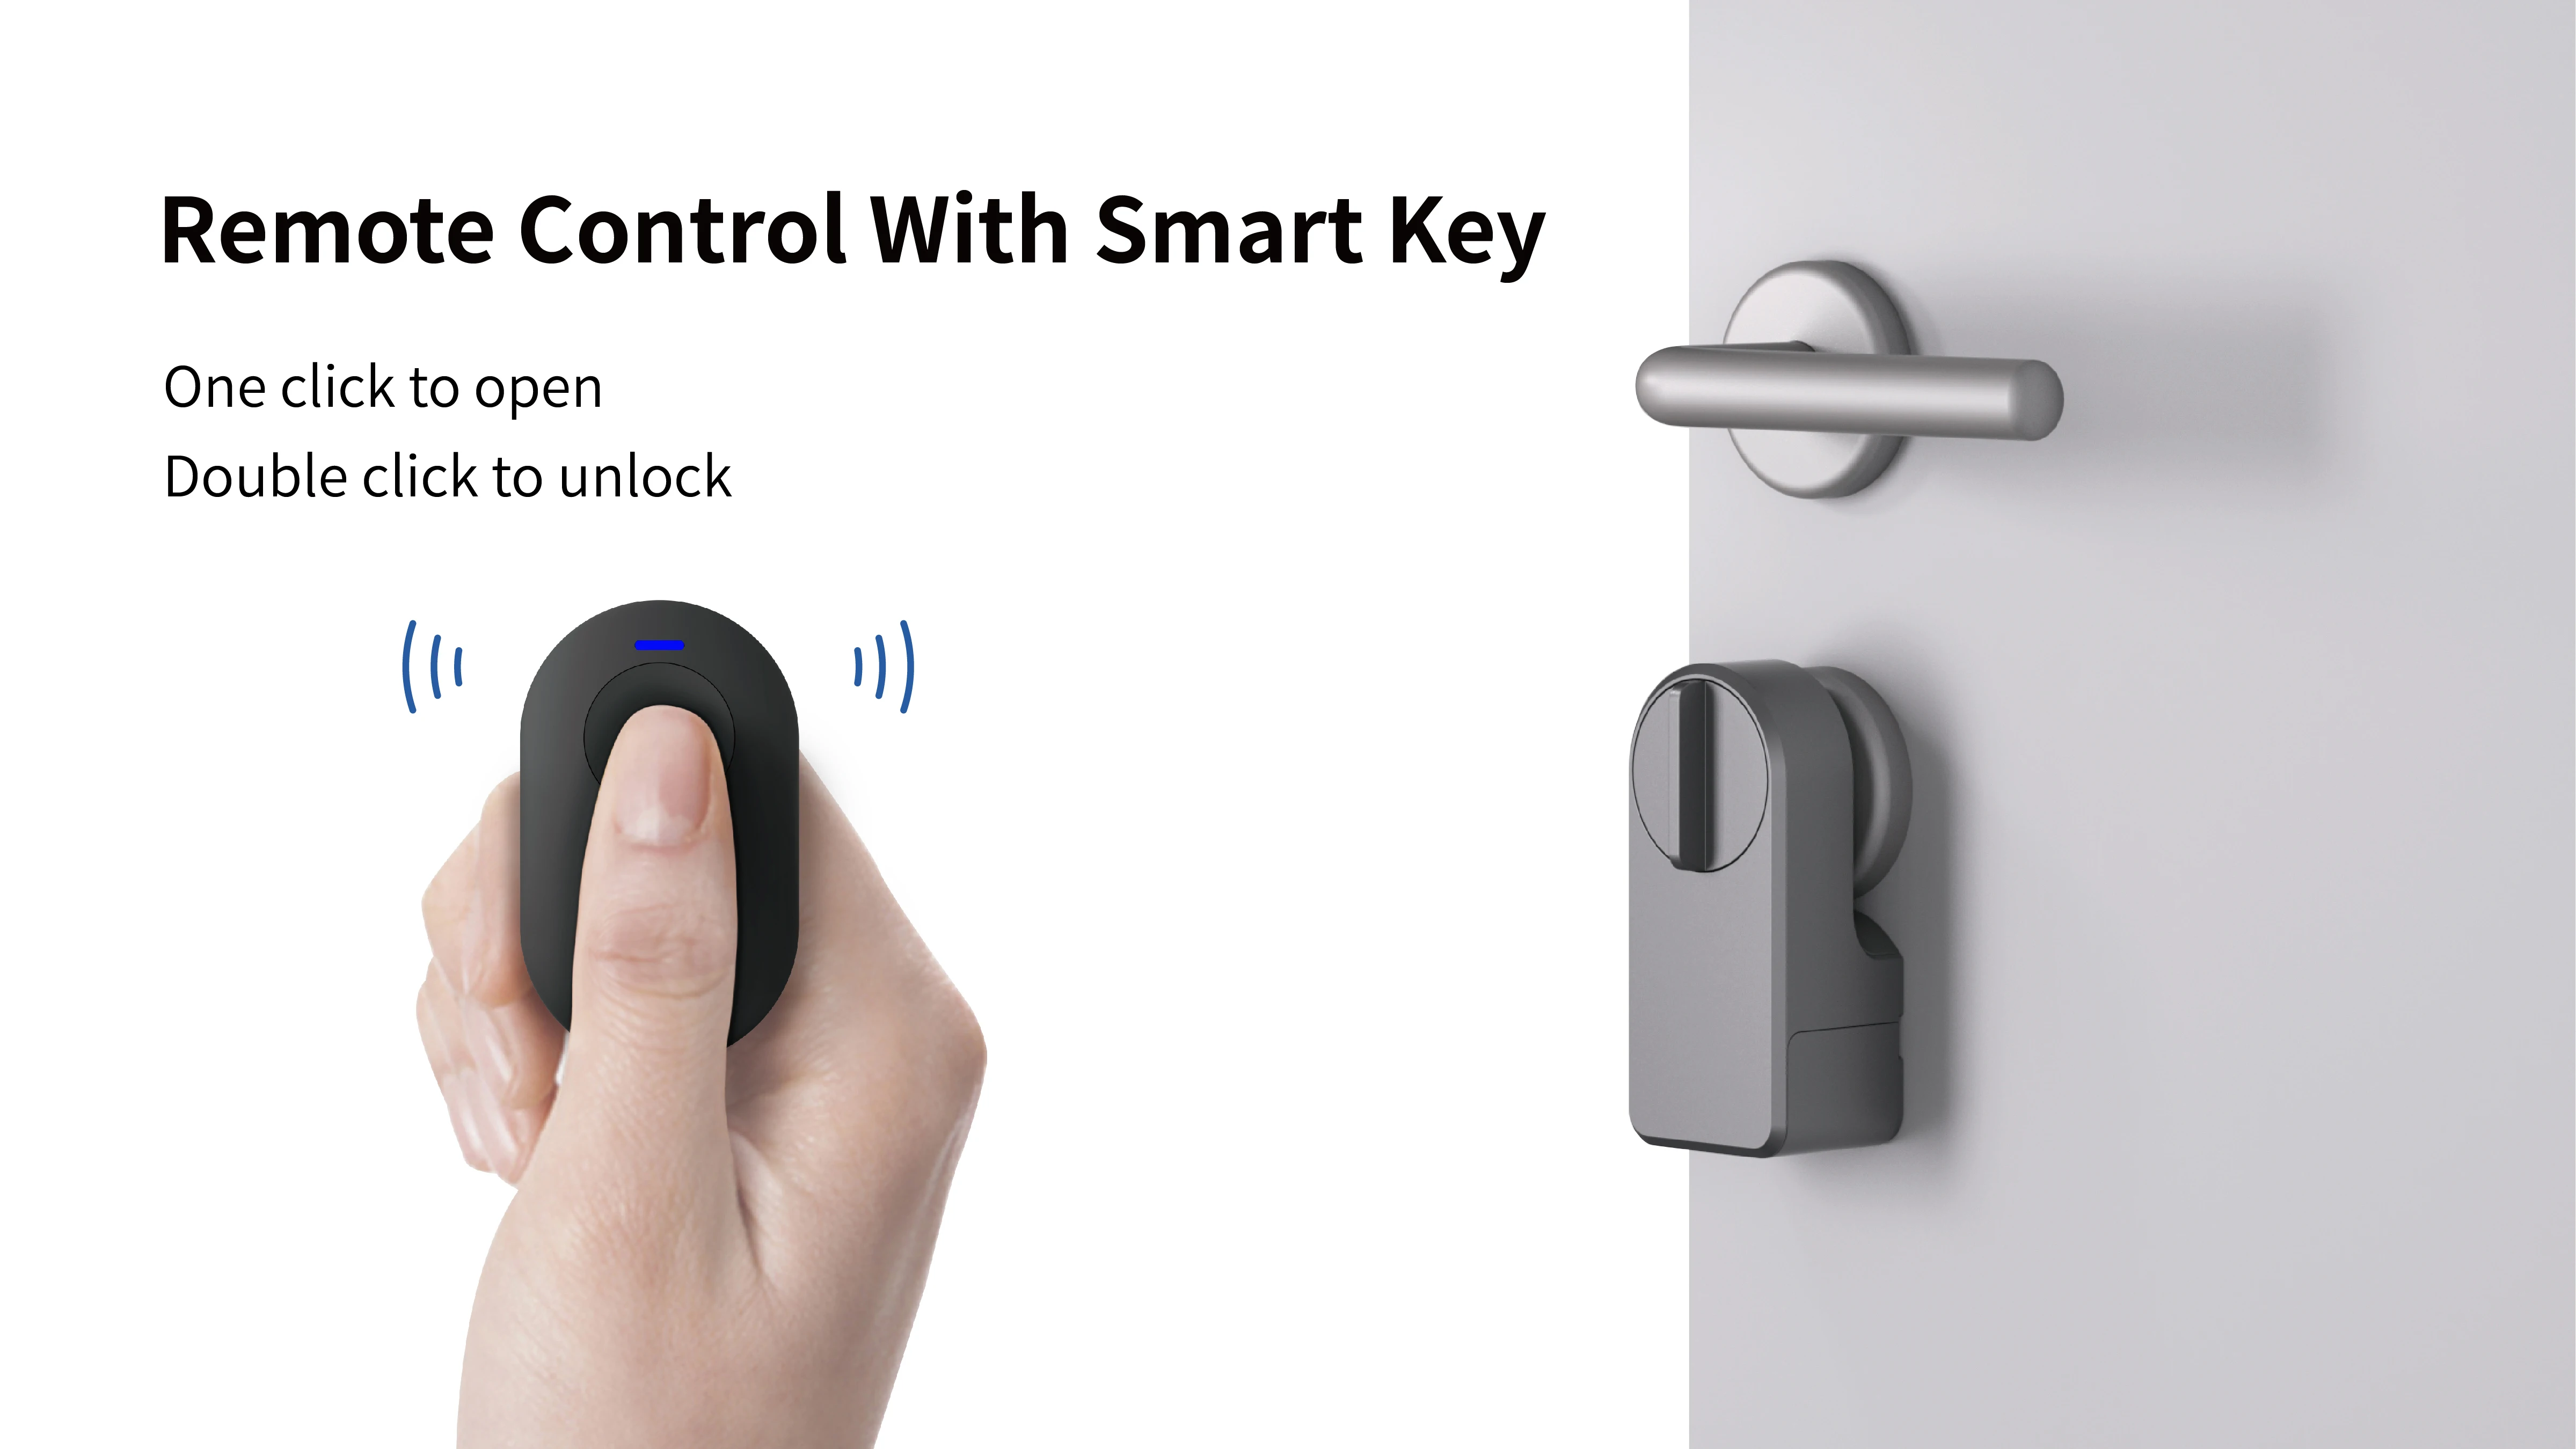 GIMDOW Bluetooth-compatible smart door lock can smart key/password /APP unlock with Tuya smart or smart life APP Electronic Lock